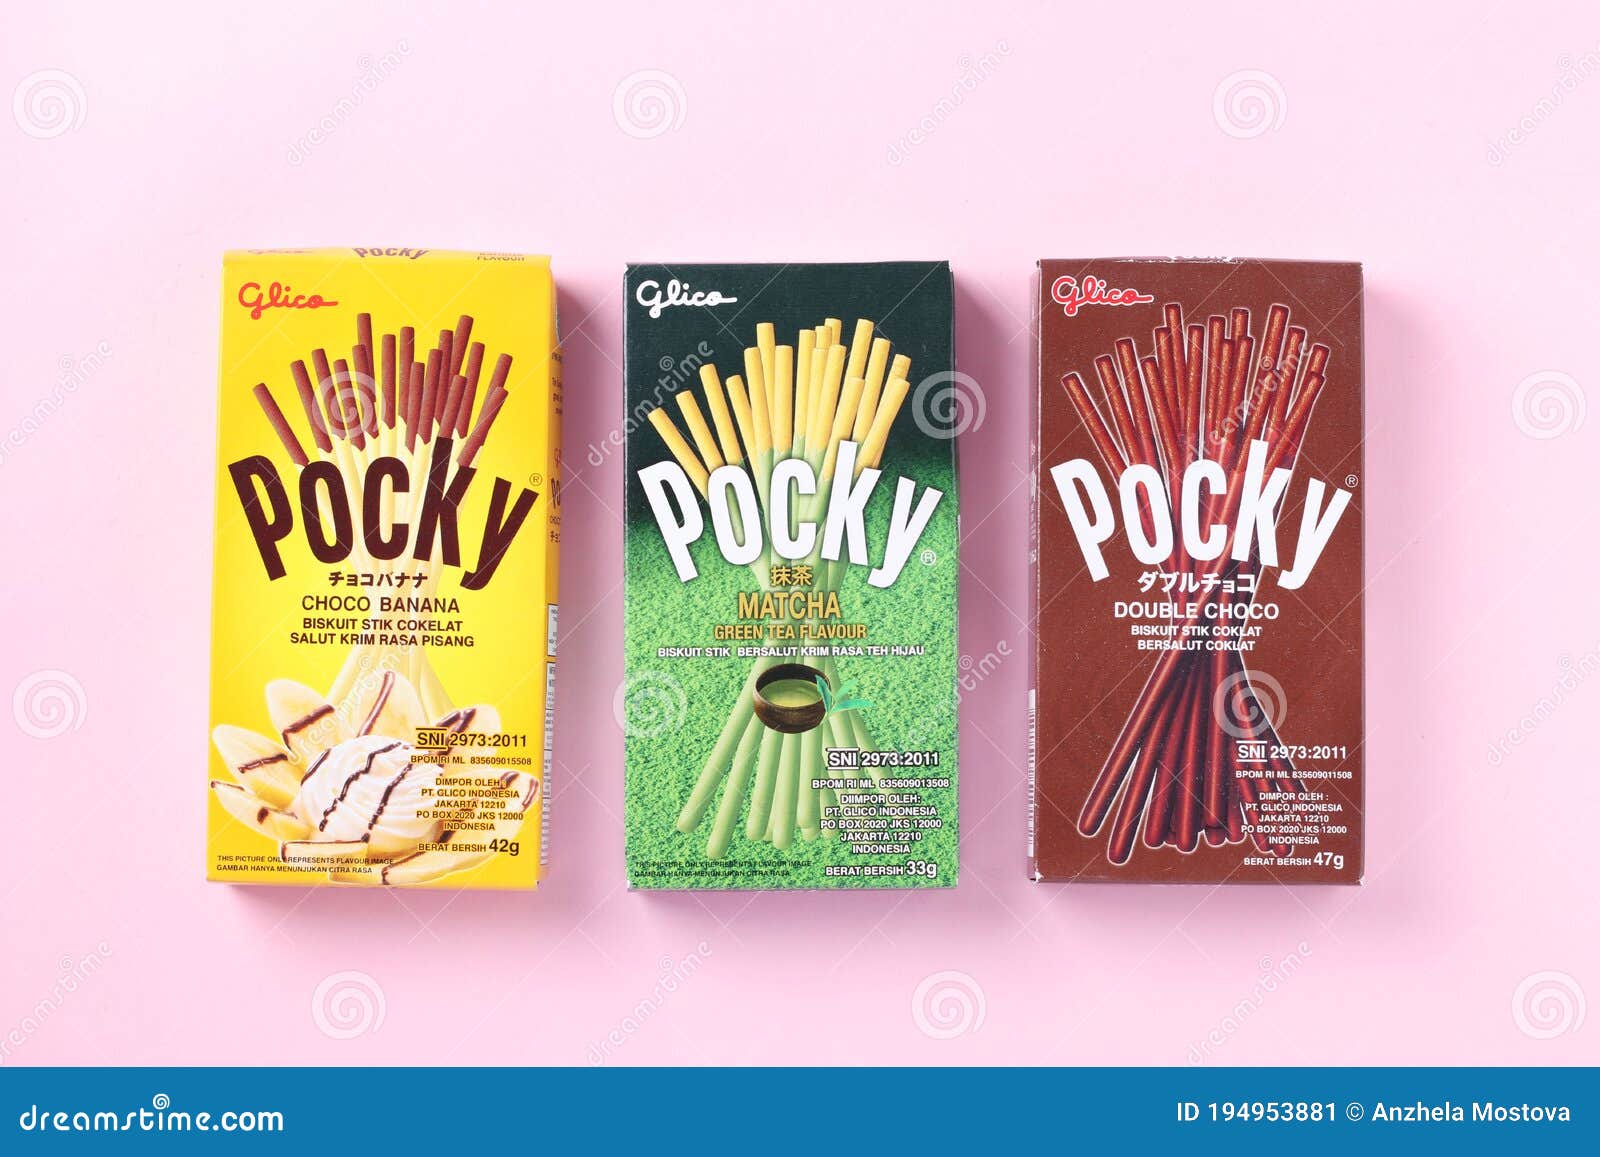 Pocky Chocolate  PT Glico Indonesia